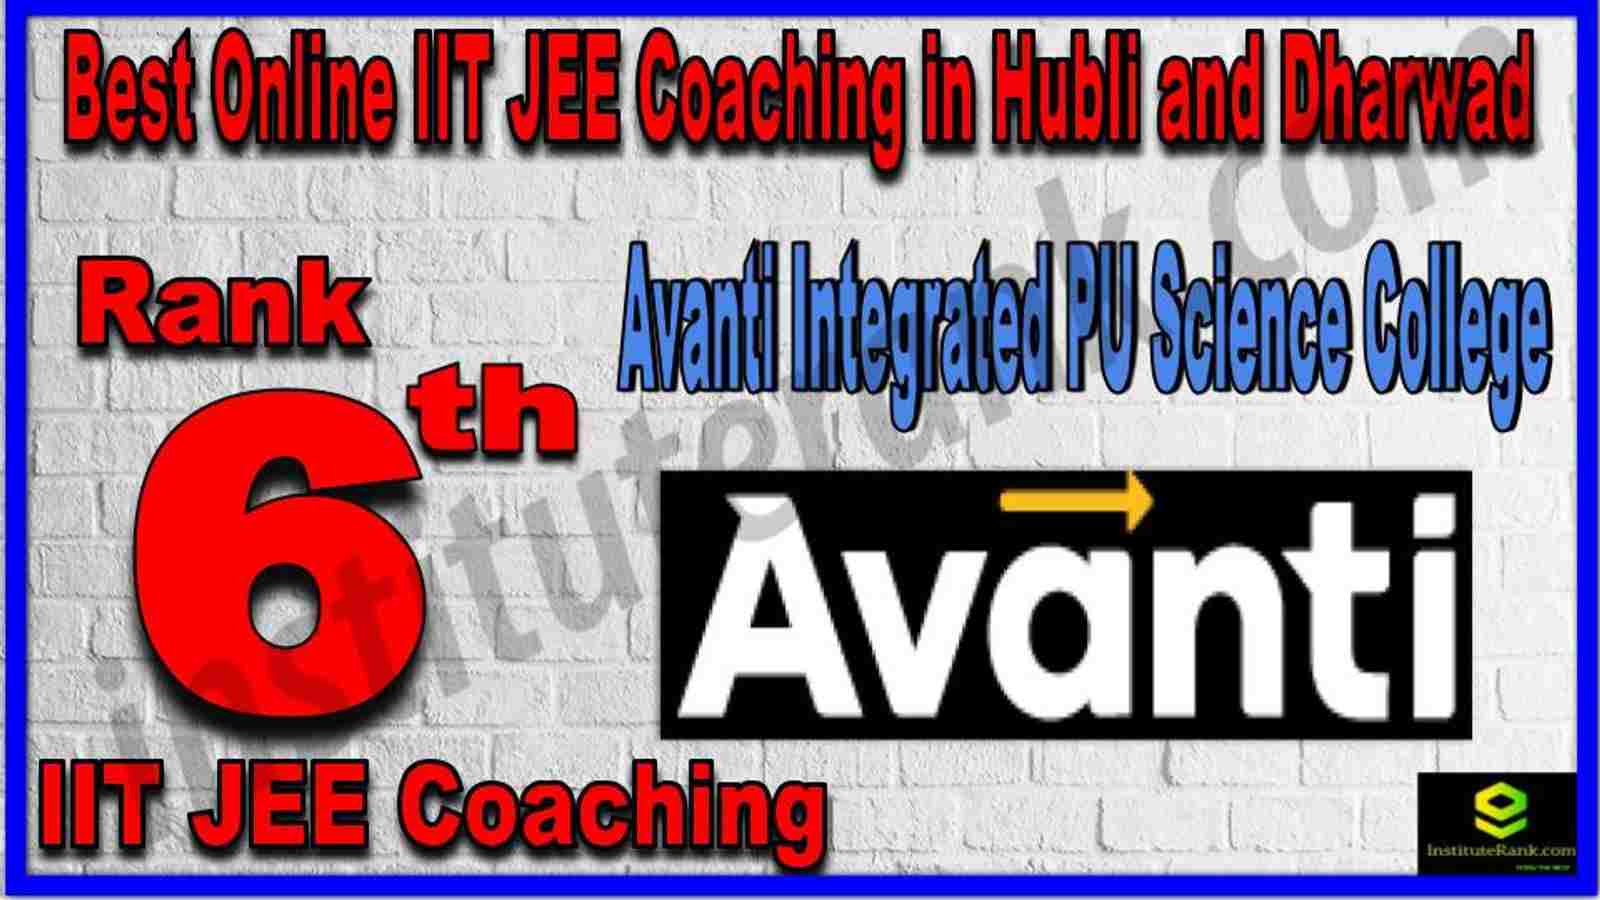 Rank 6th Best Online IIT JEE Coaching in Hubli and Dharwad